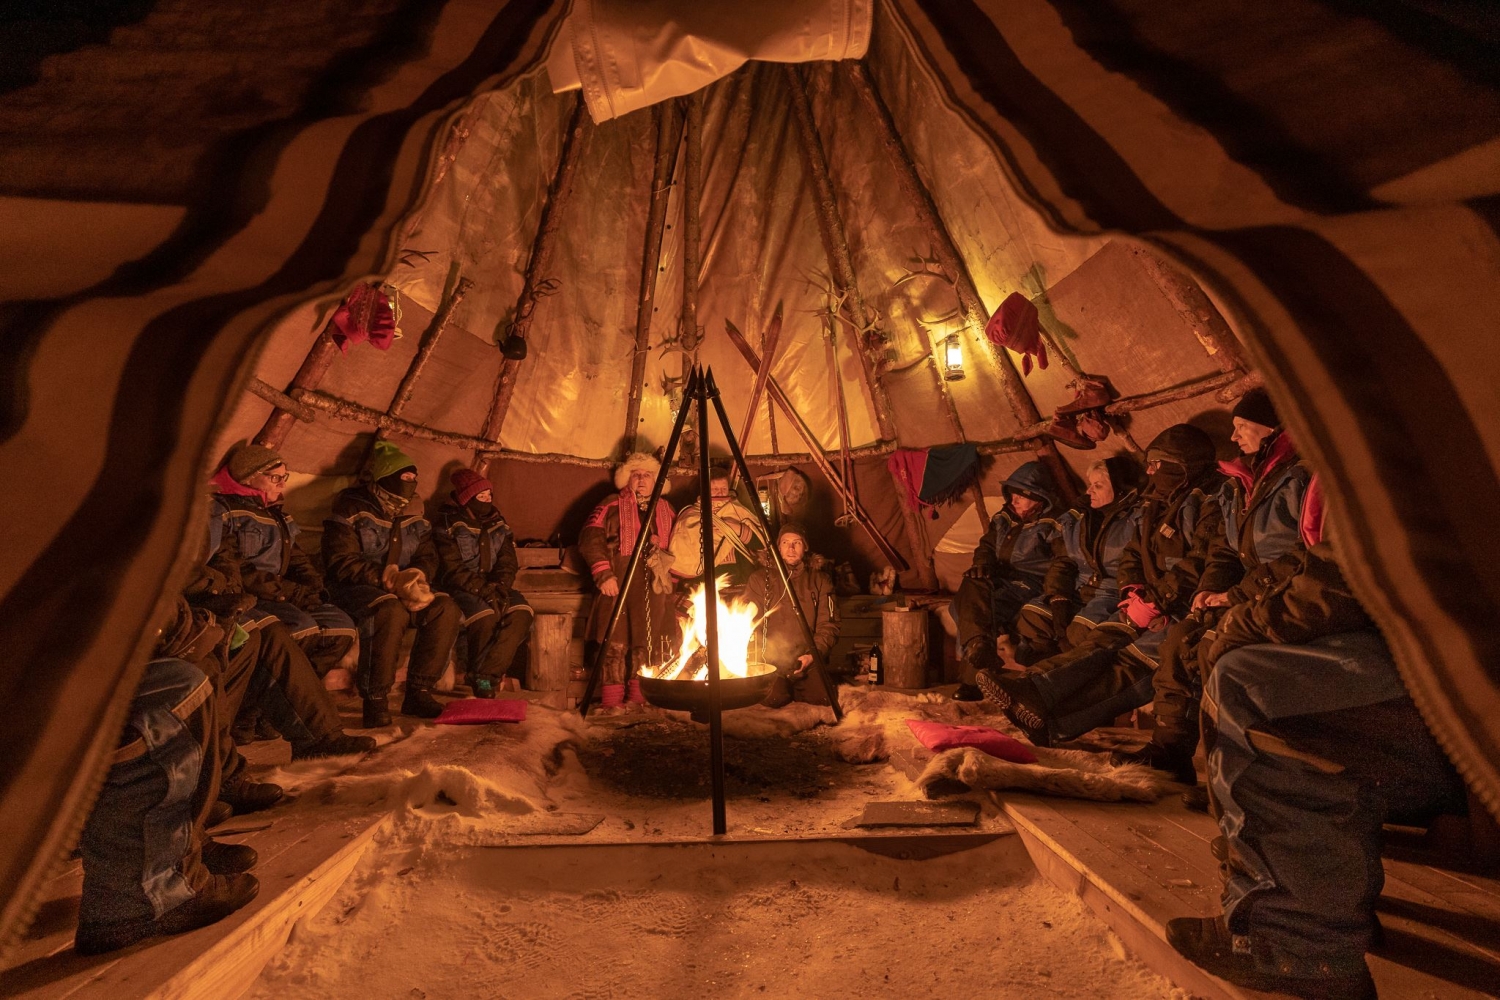 Guests gathered around a bonfire inside a Sami lavvu